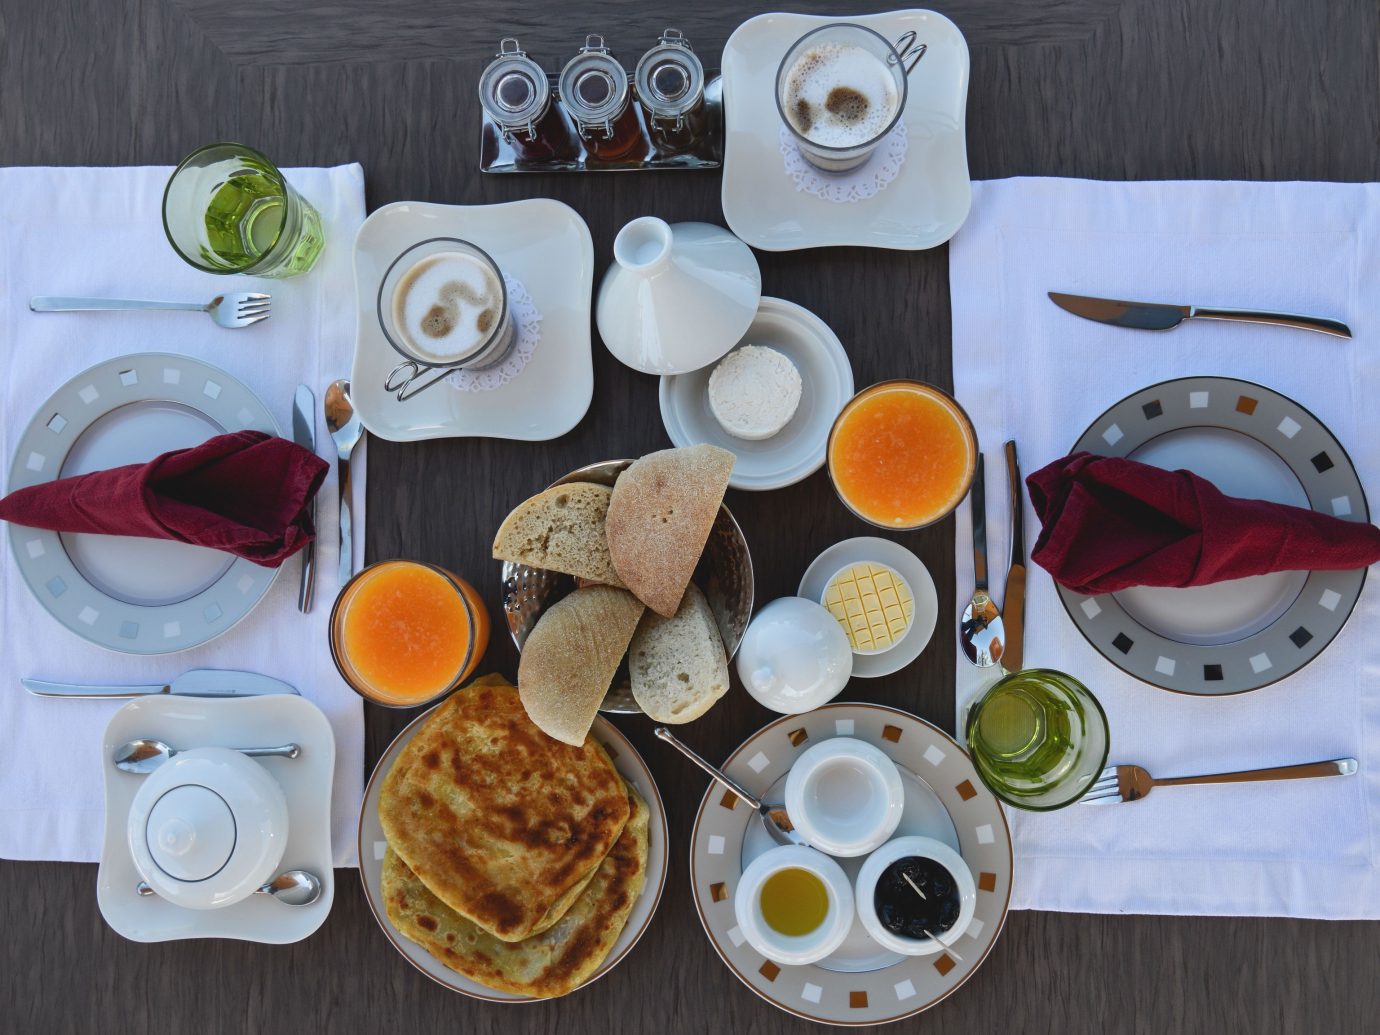 Hotels plate meal indoor dish breakfast lunch food brunch baking